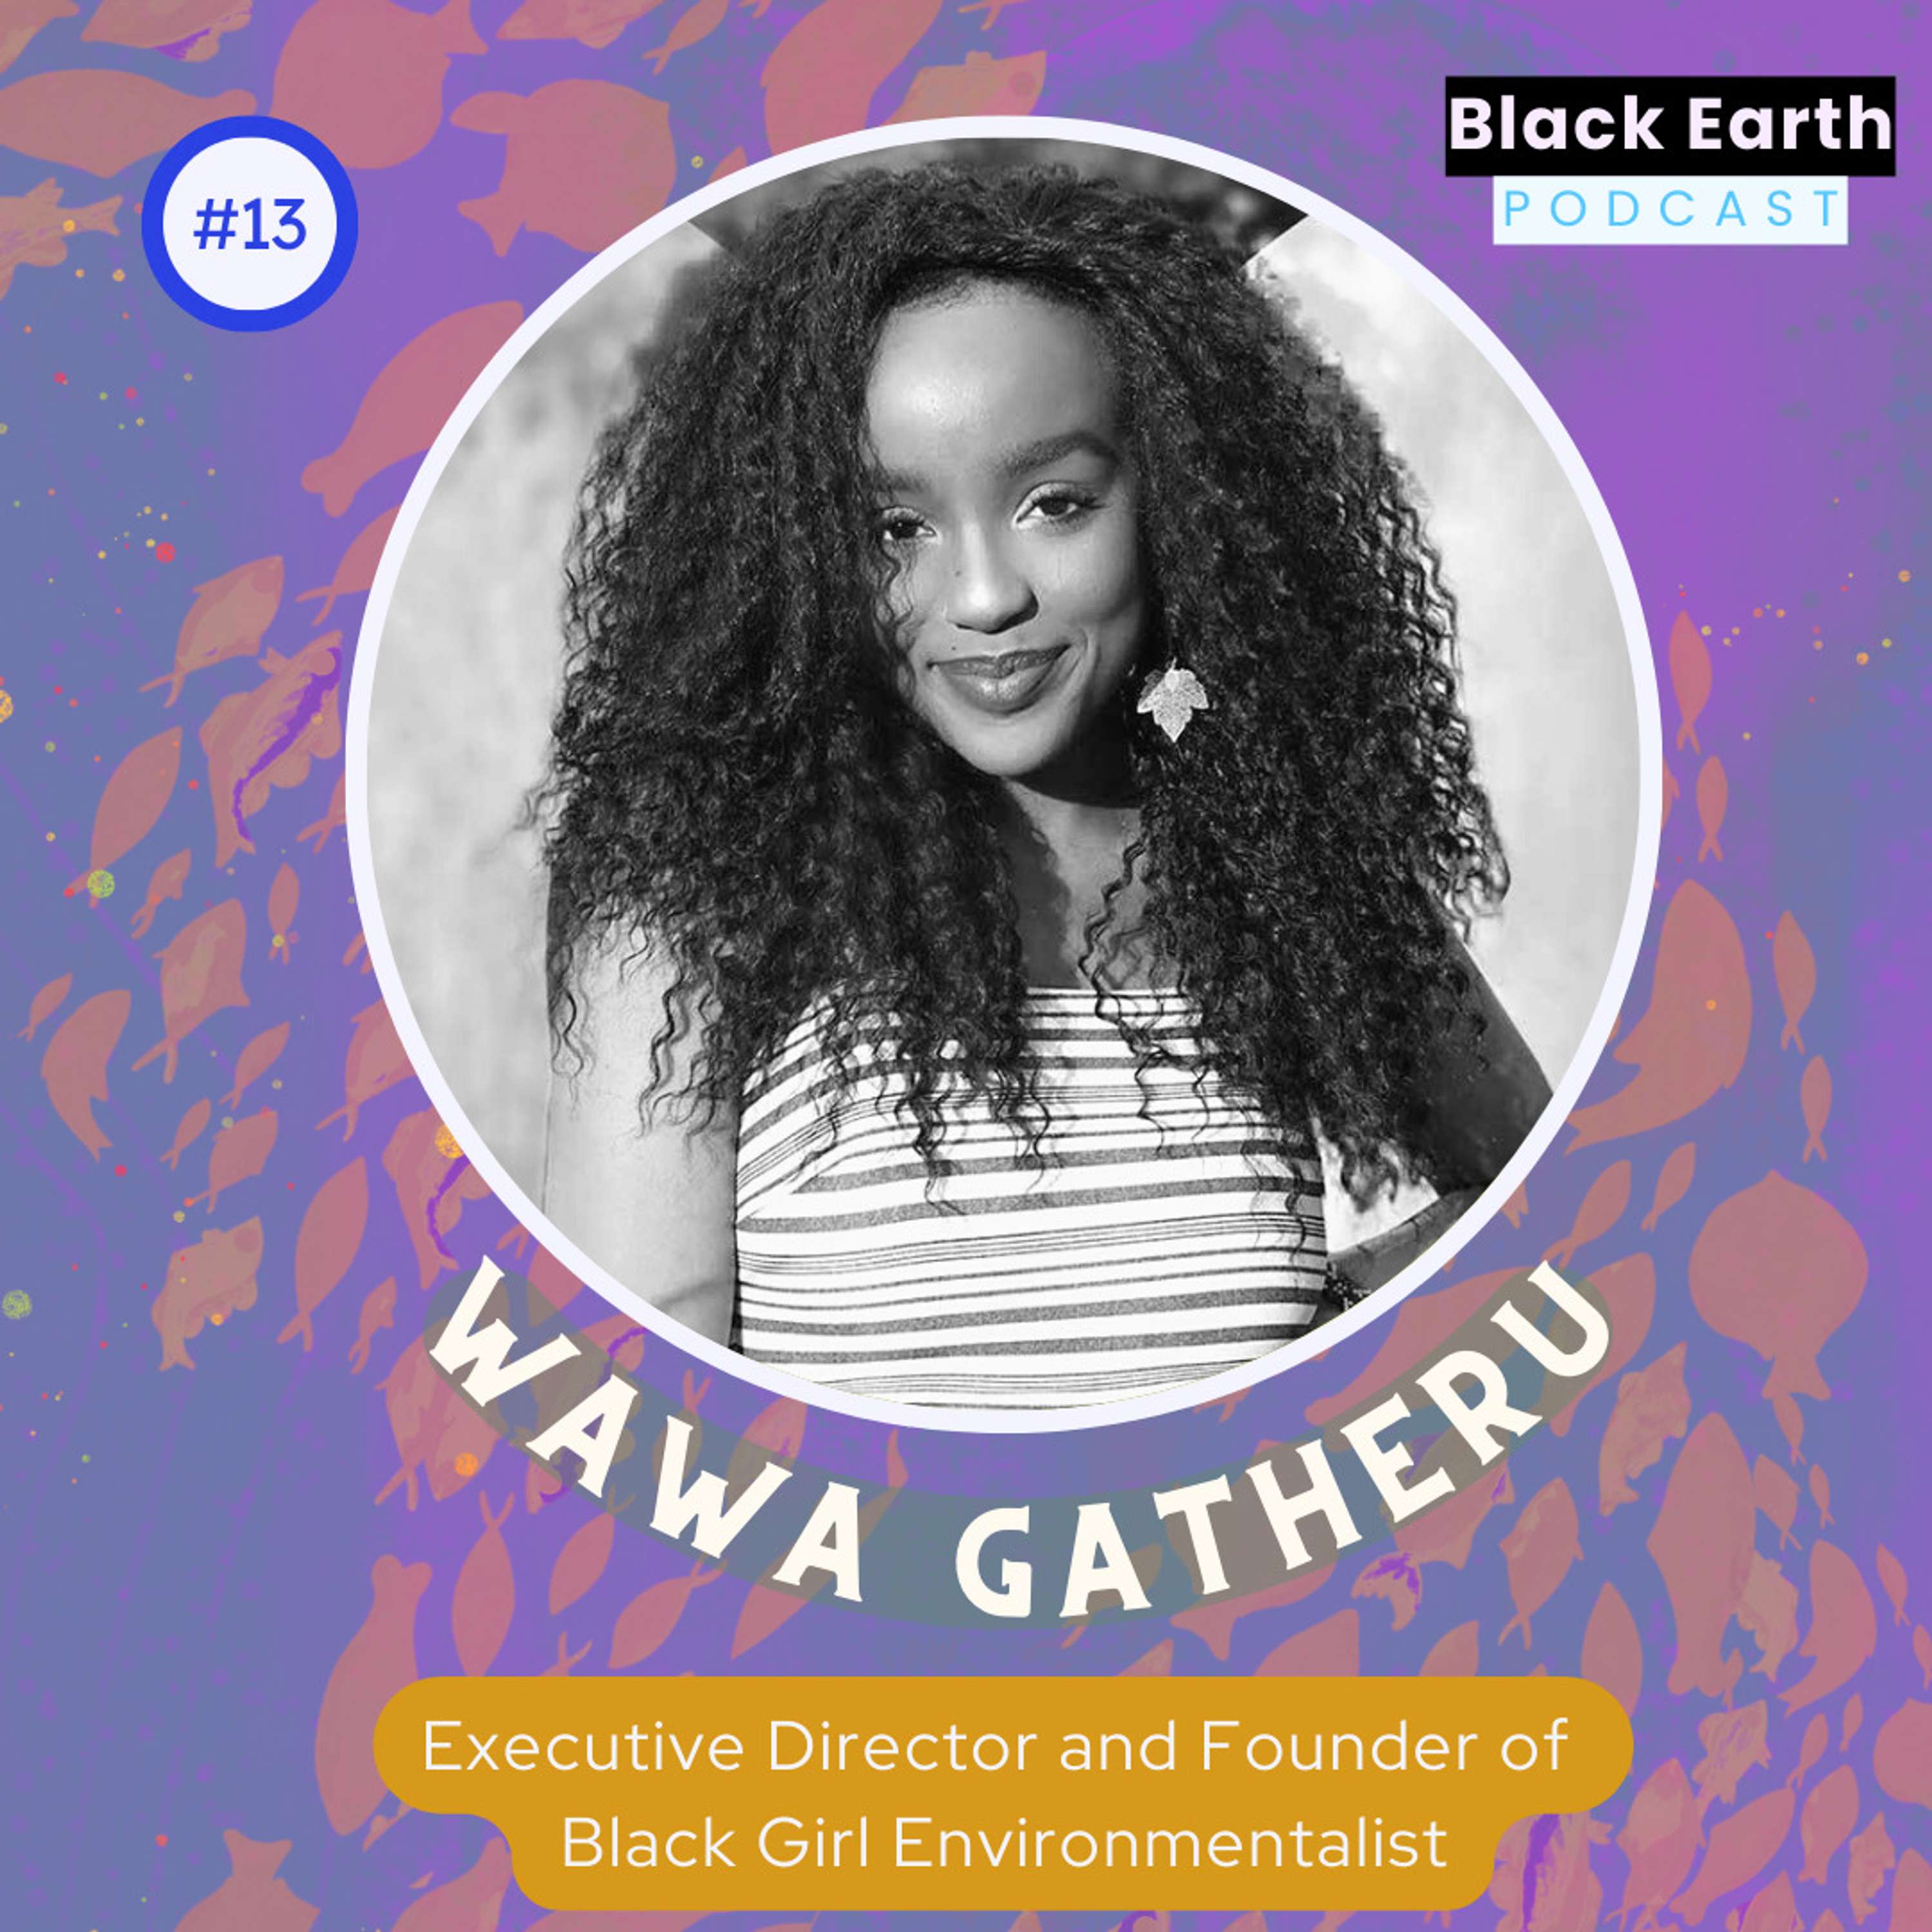 Becoming Black Girl Environmentalists with Wanjiku Gatheru